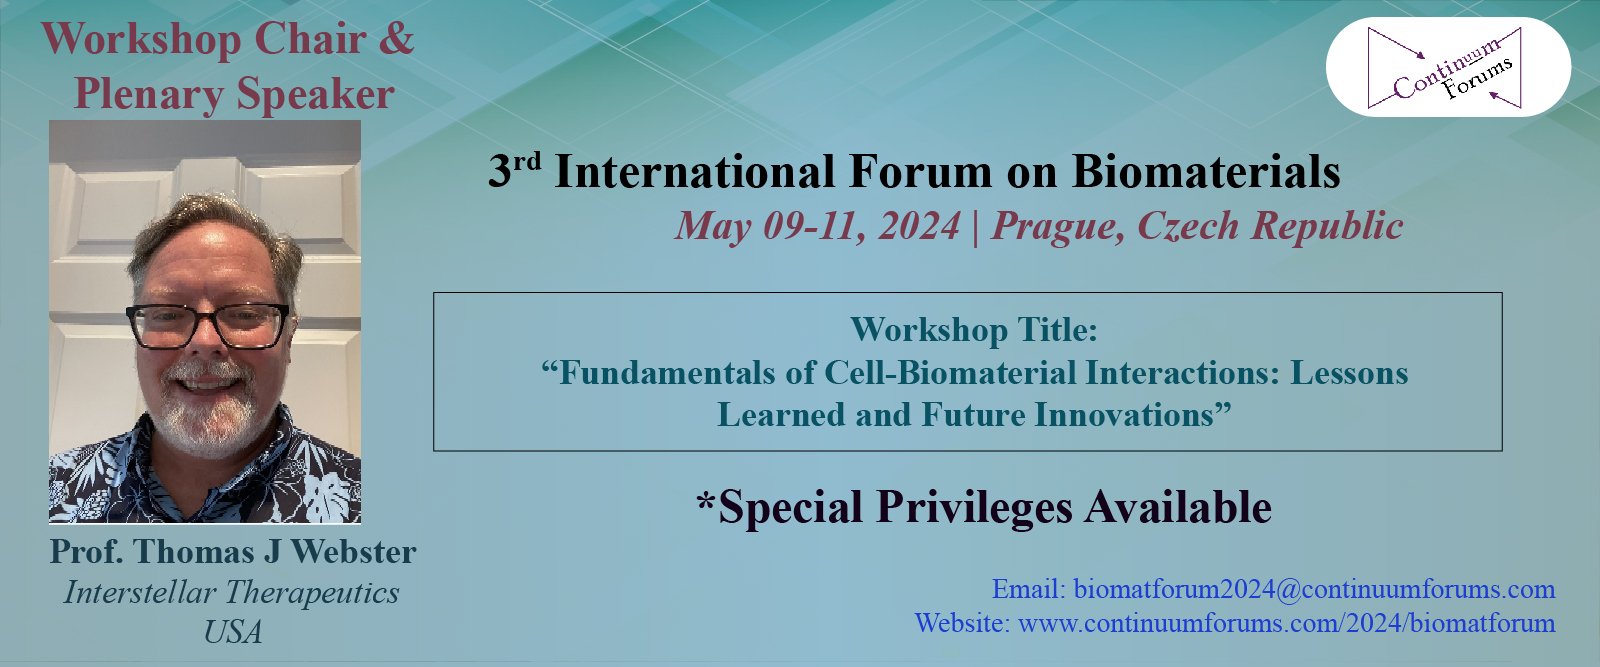 BIOMATFORUM2024 May 0911, 2024 3rd International Forum on